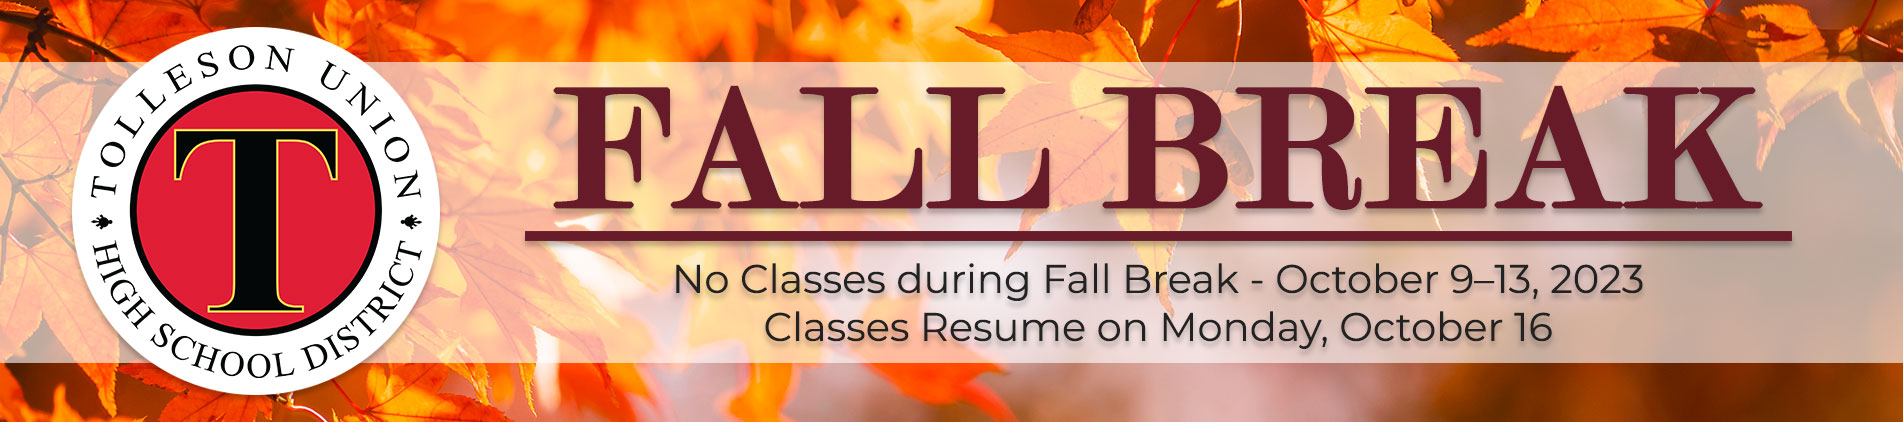 Fall Break. No Classes during Fall Break - October 9-13, 2023. Classes Resume on Monday, October 16.